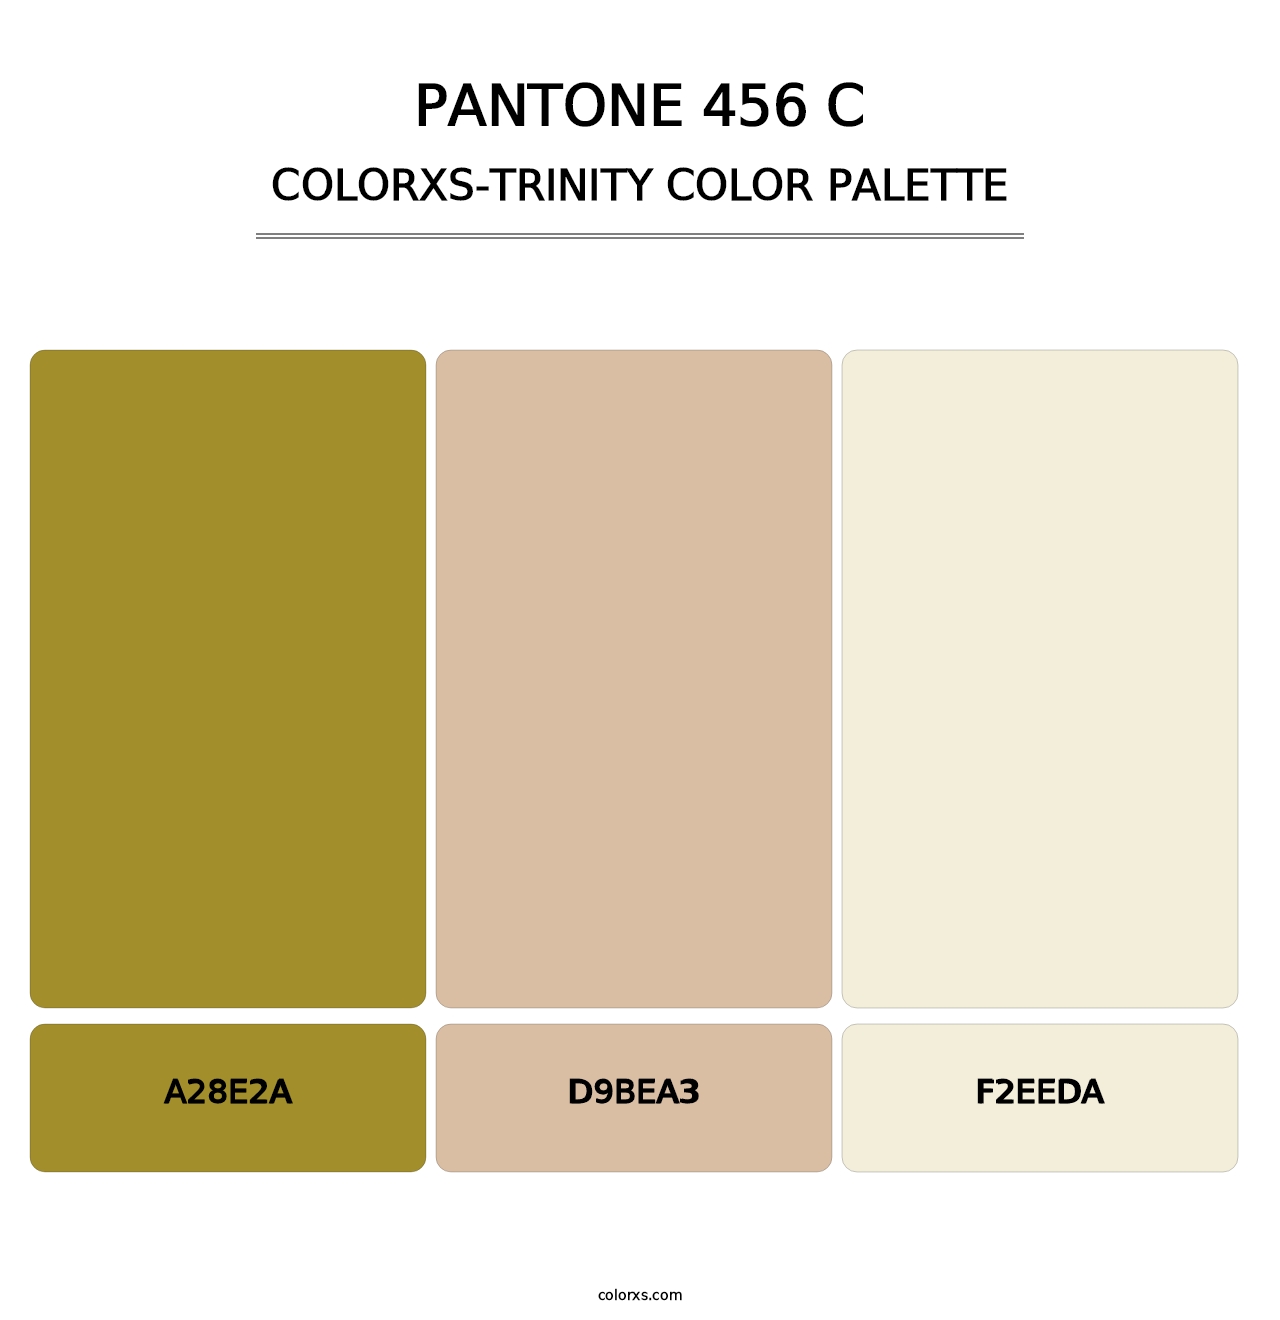 PANTONE 456 C - Colorxs Trinity Palette